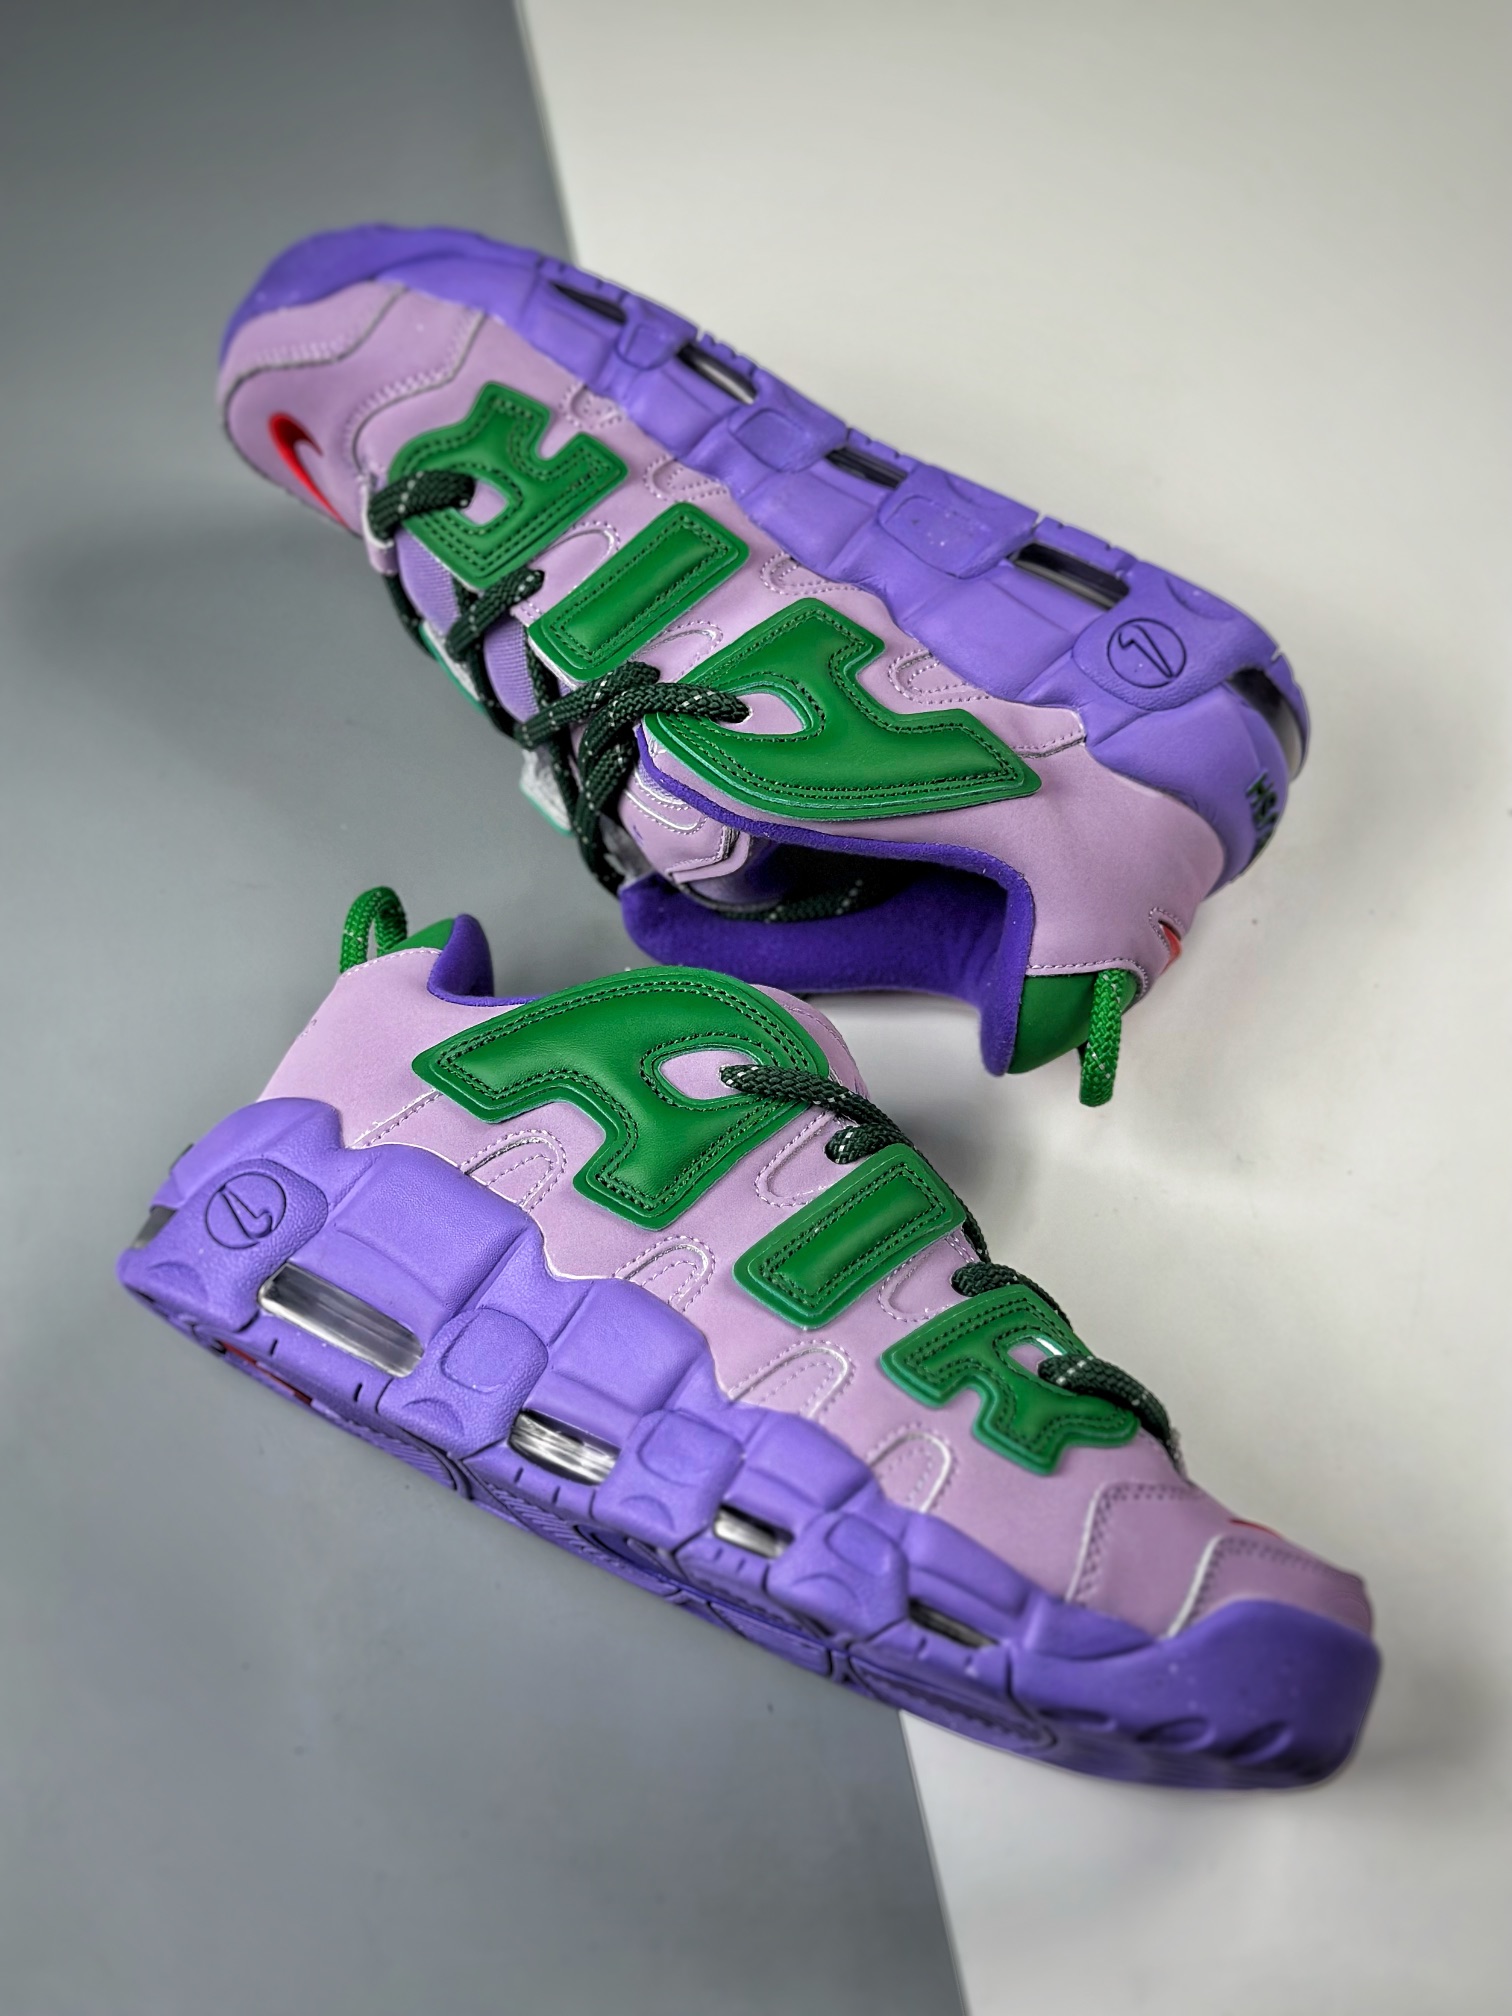 AMBUSH × Nike Air More Uptempo Low "Lilac and Apple Green"FB